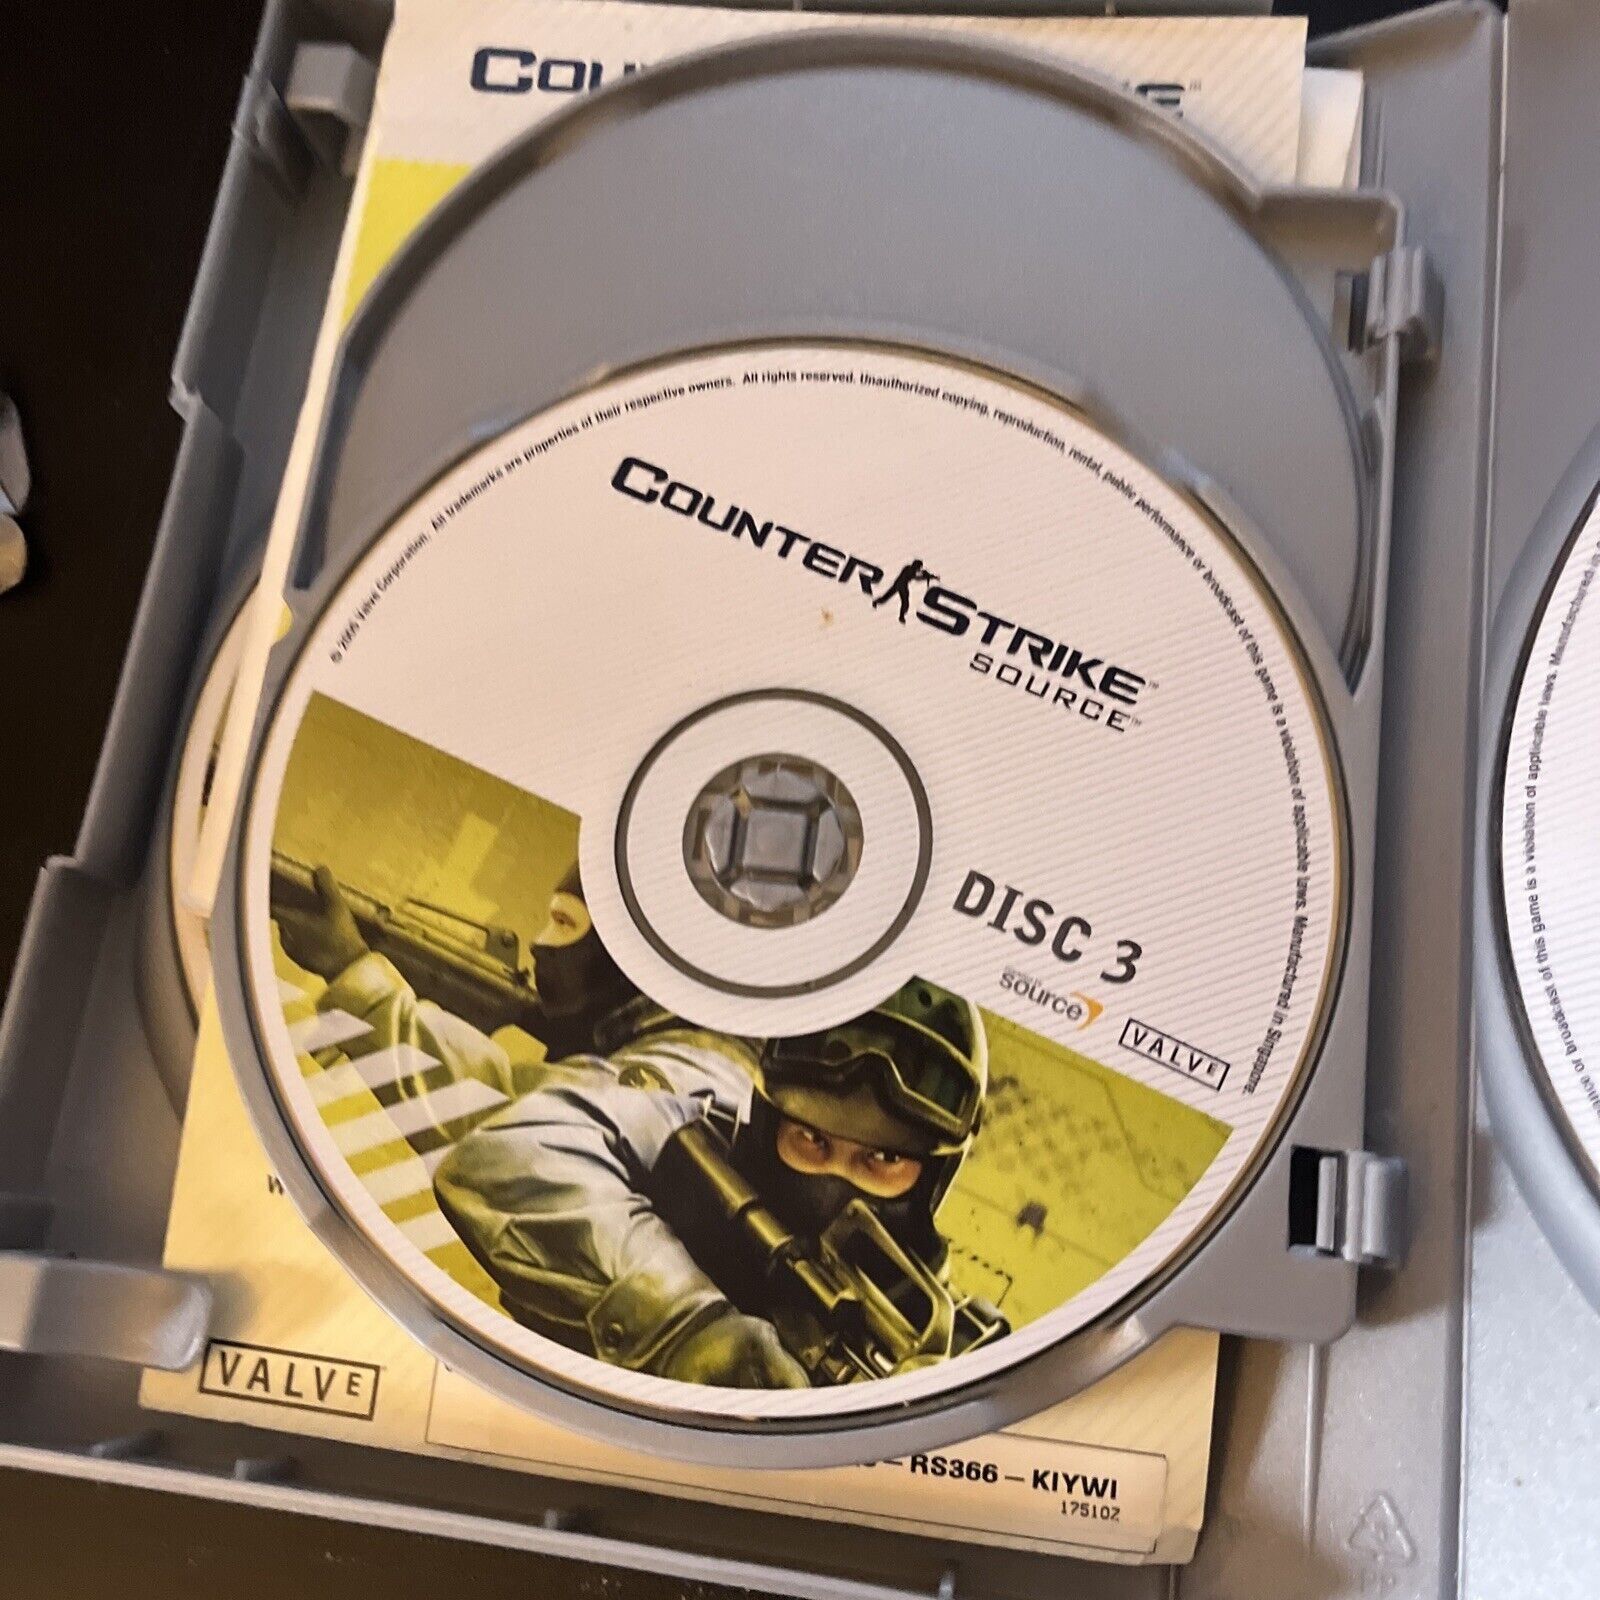 Counter Strike Condition Zero 2 DVD PC Gaming CD Key Jewel 